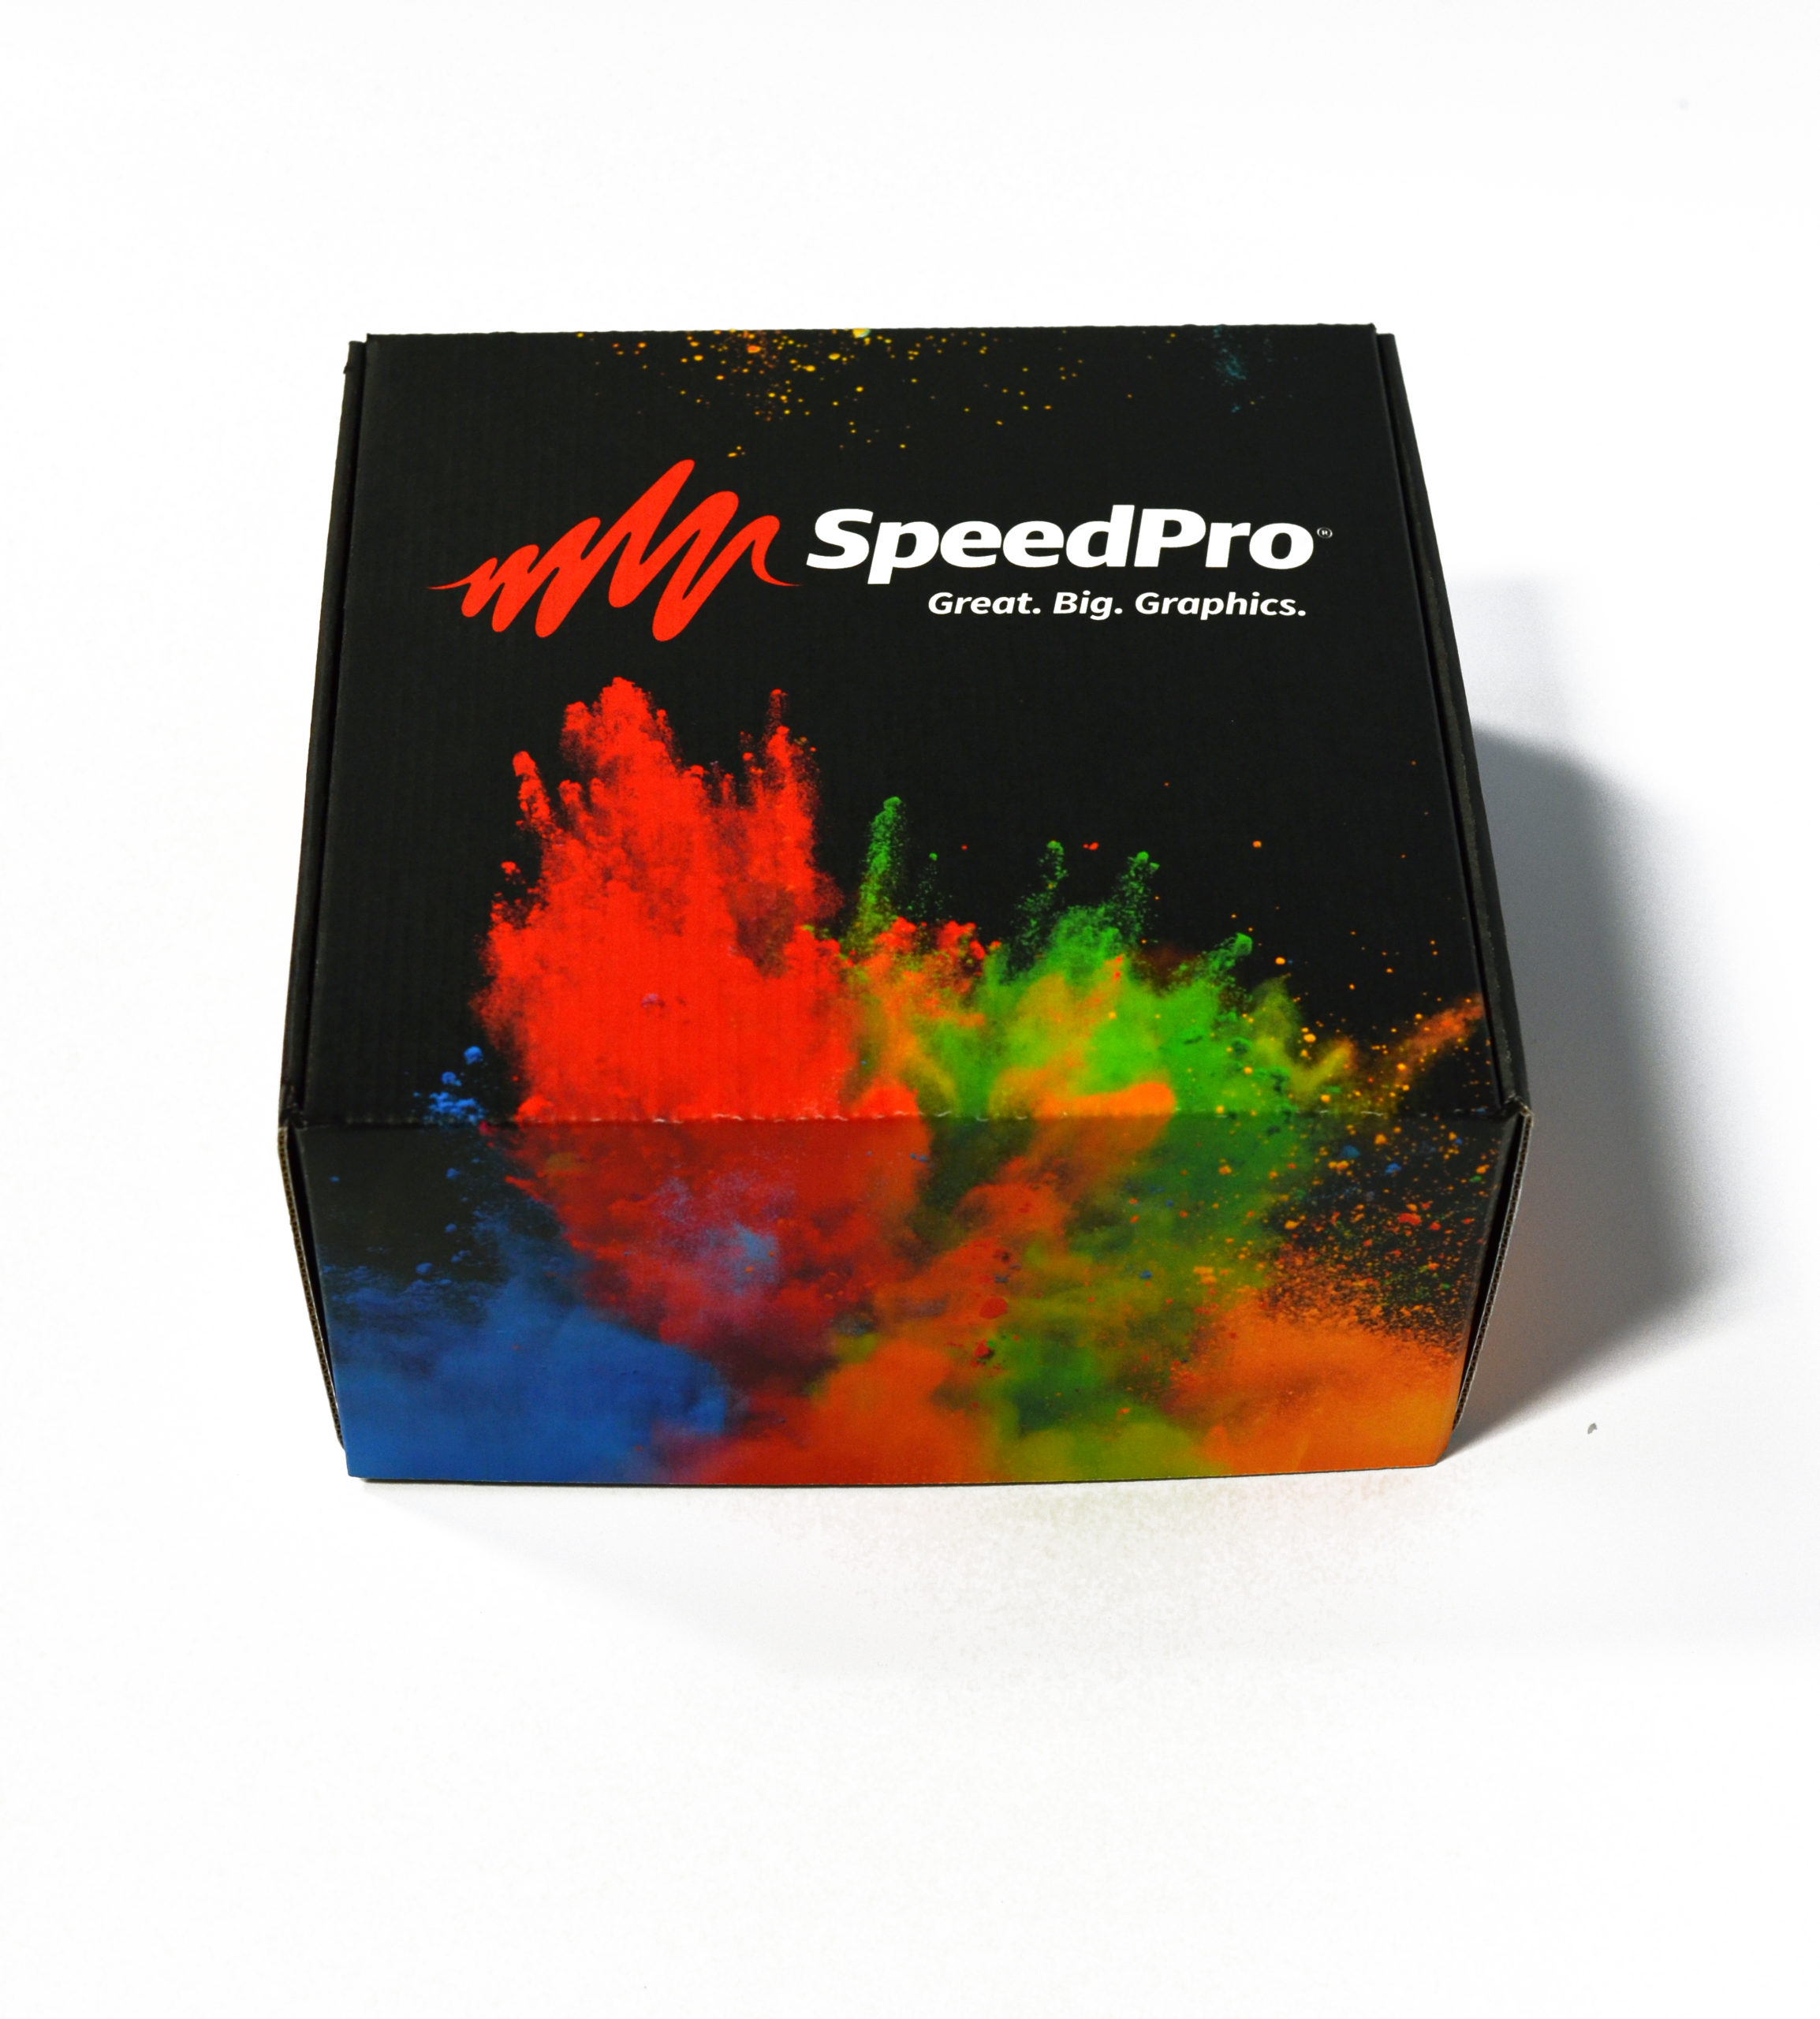 SpeedPro custom printed box